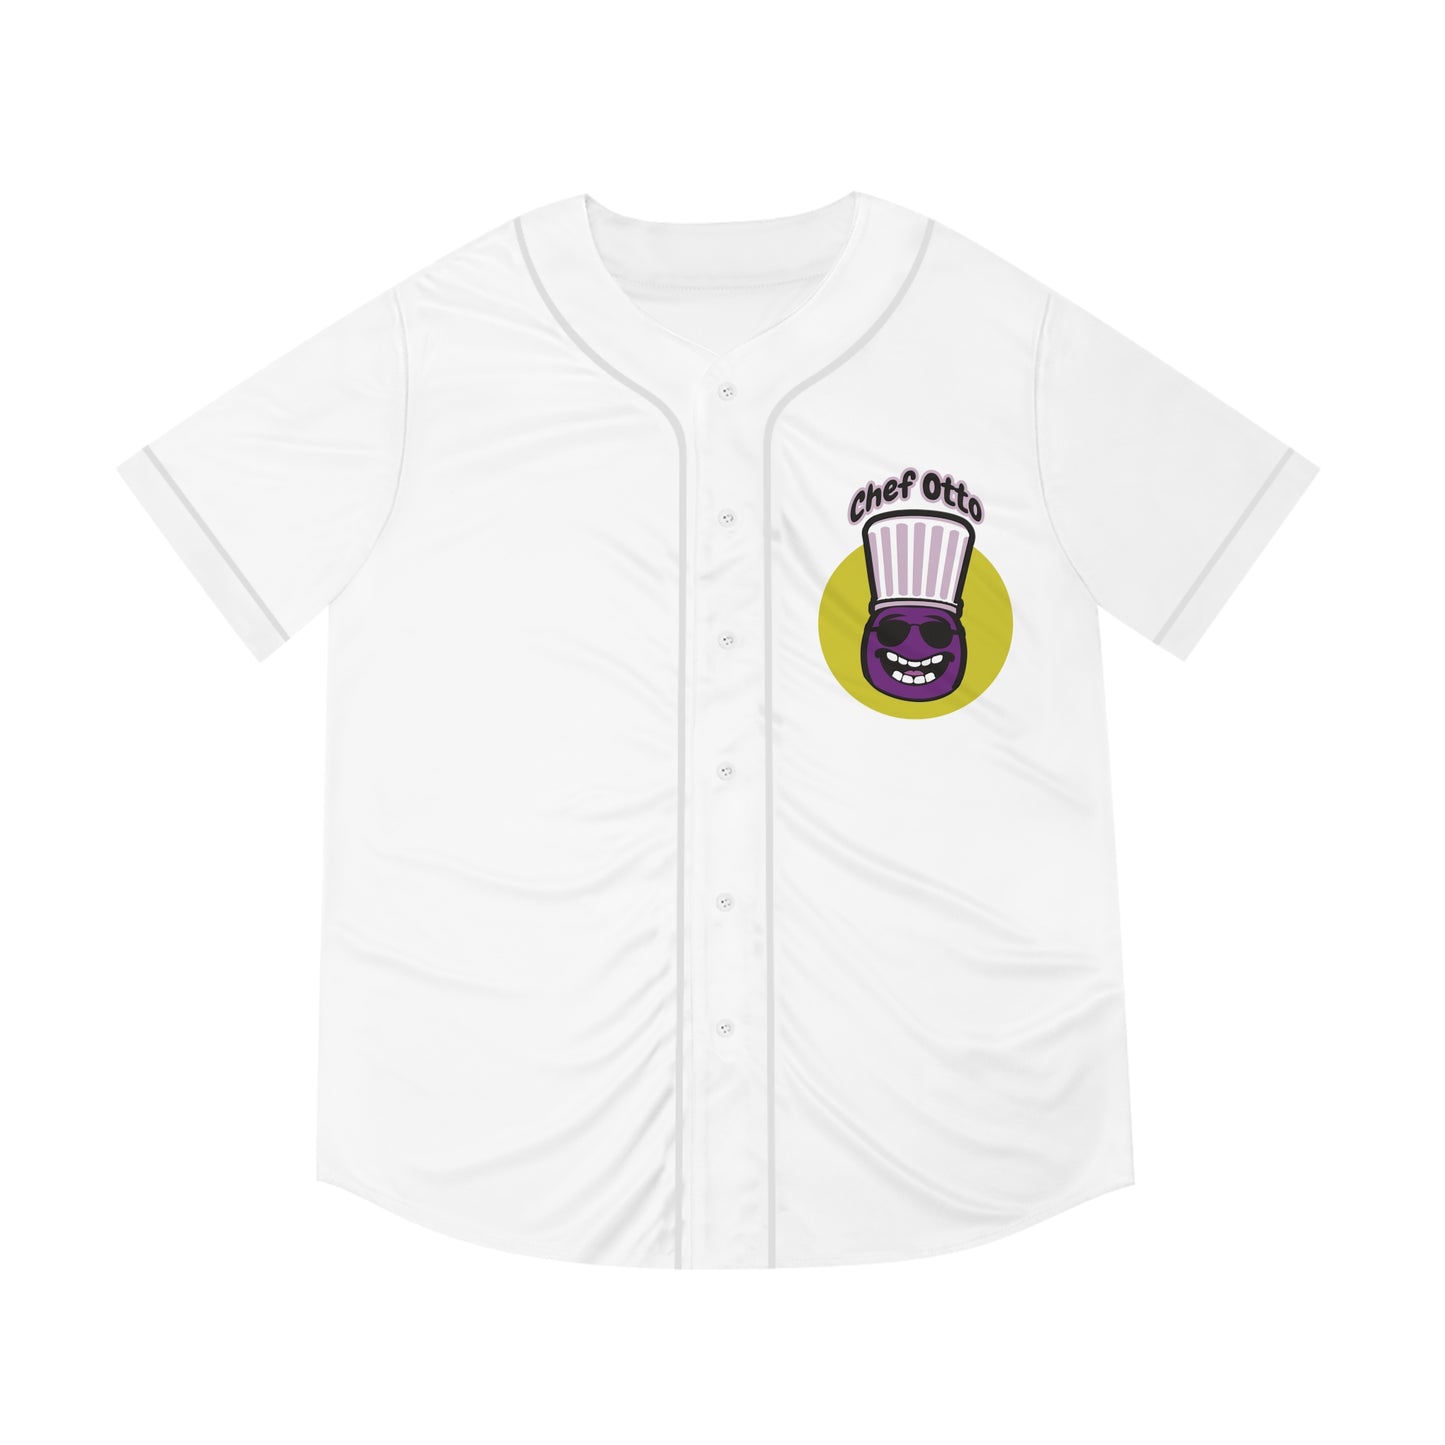 Chef Otto Men's Baseball Jersey (Short Sleeved Shirt)